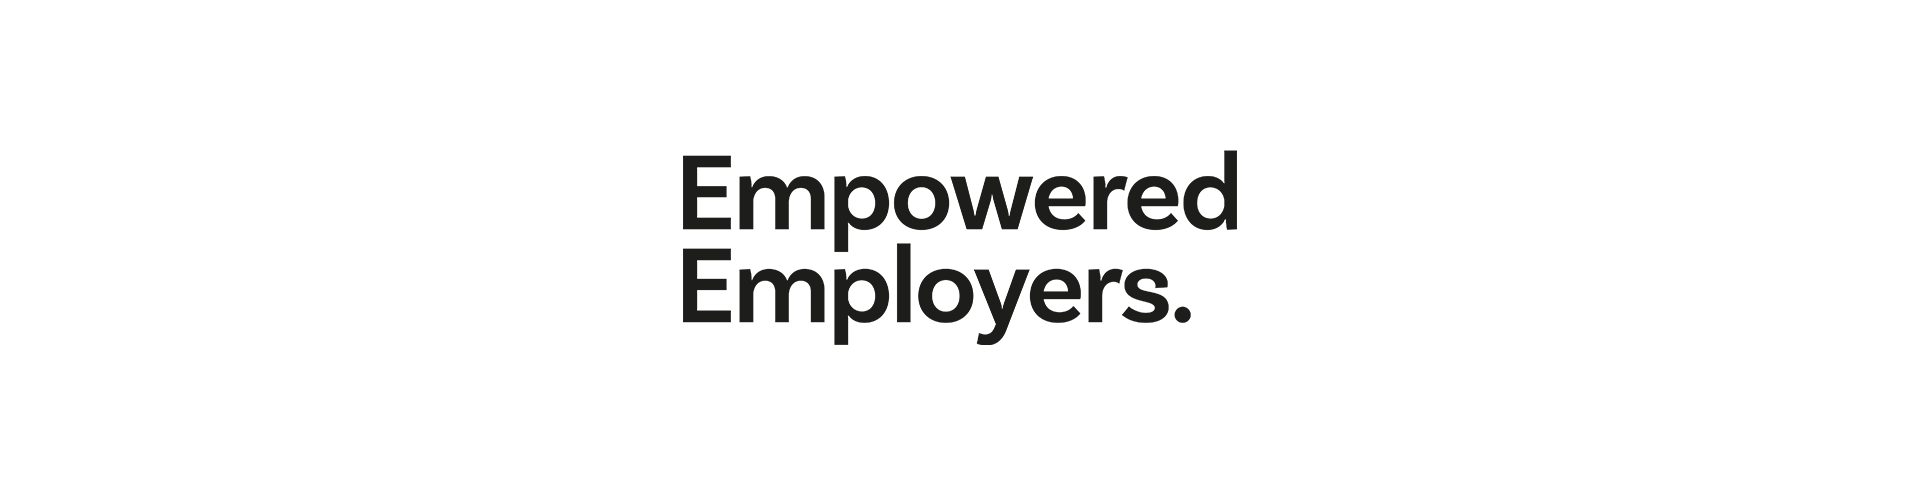 Empowered Employers